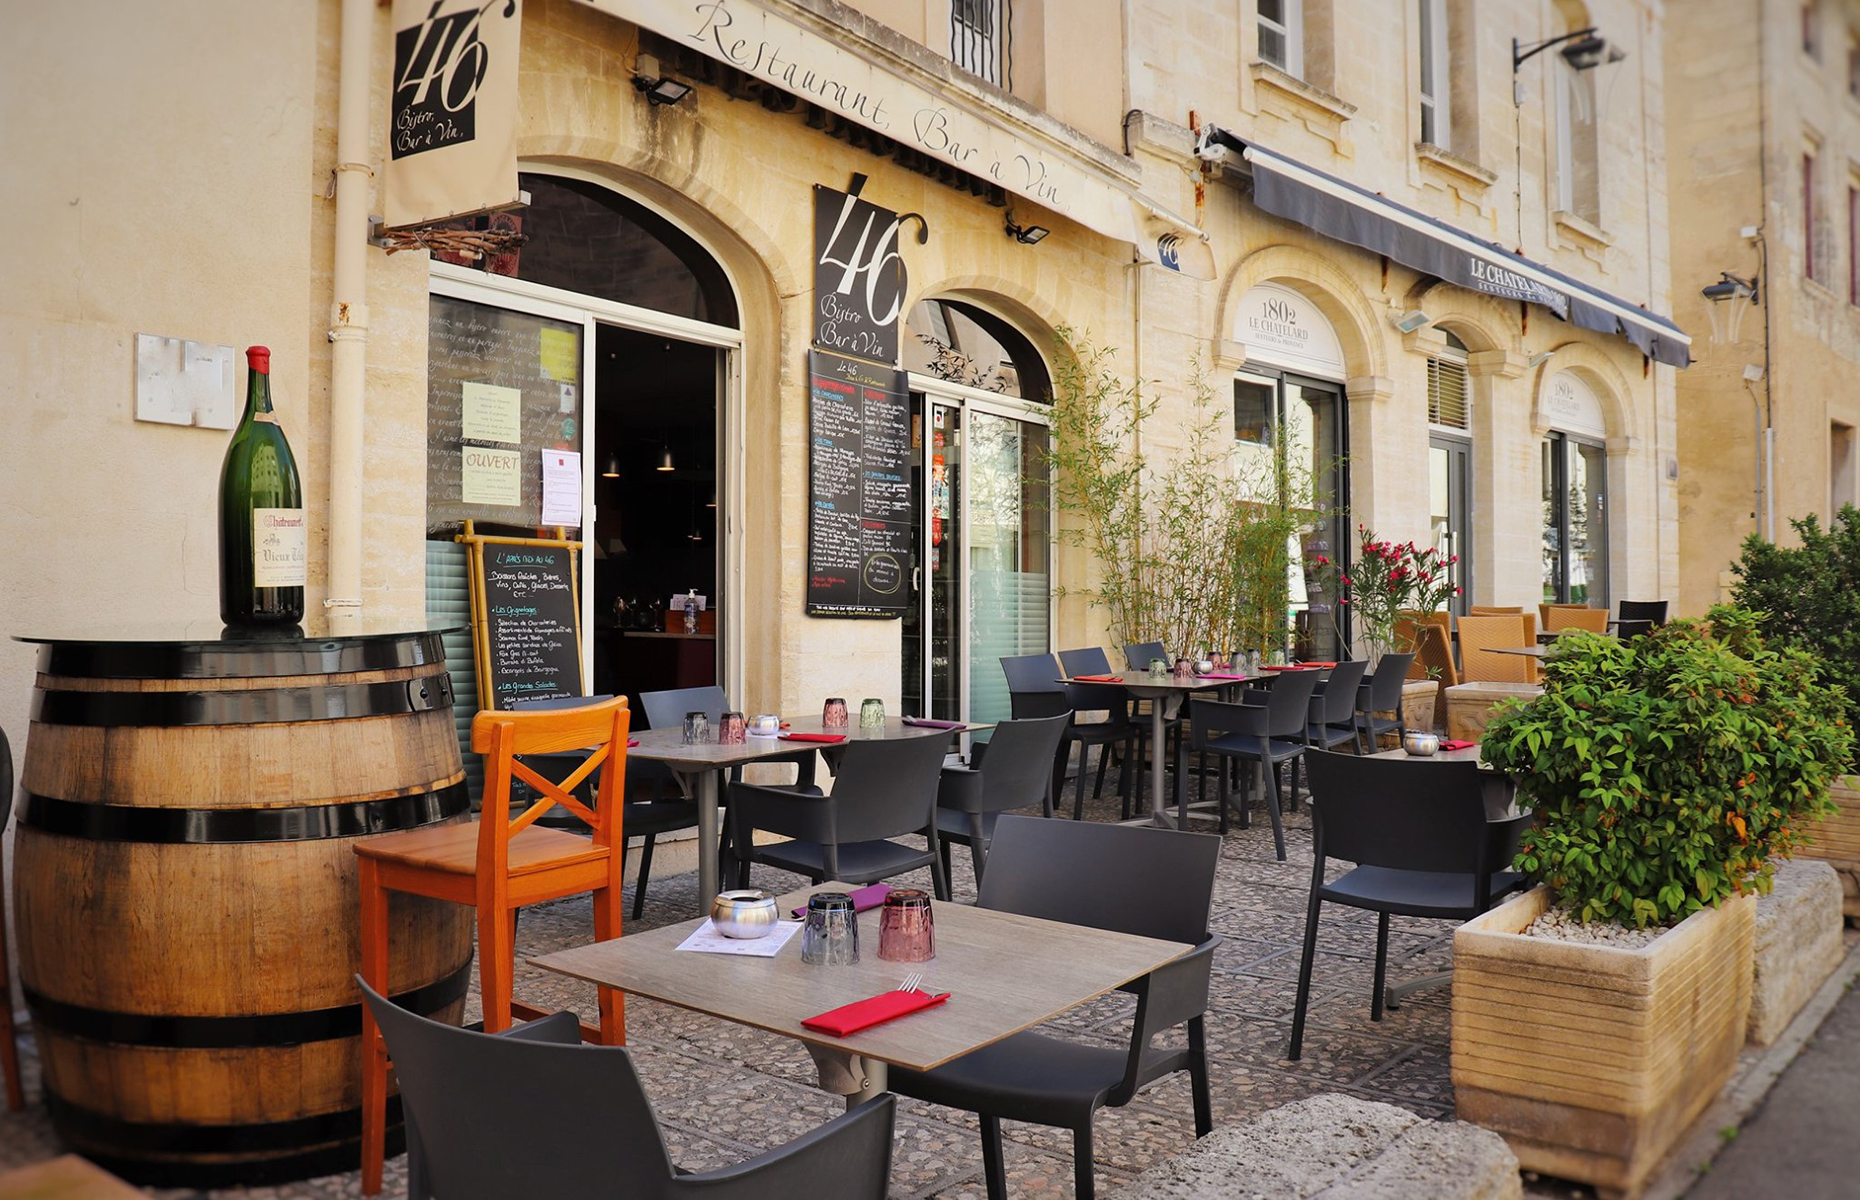 Le46 restaurant, Avignon. (Image: Le46/Facebook)